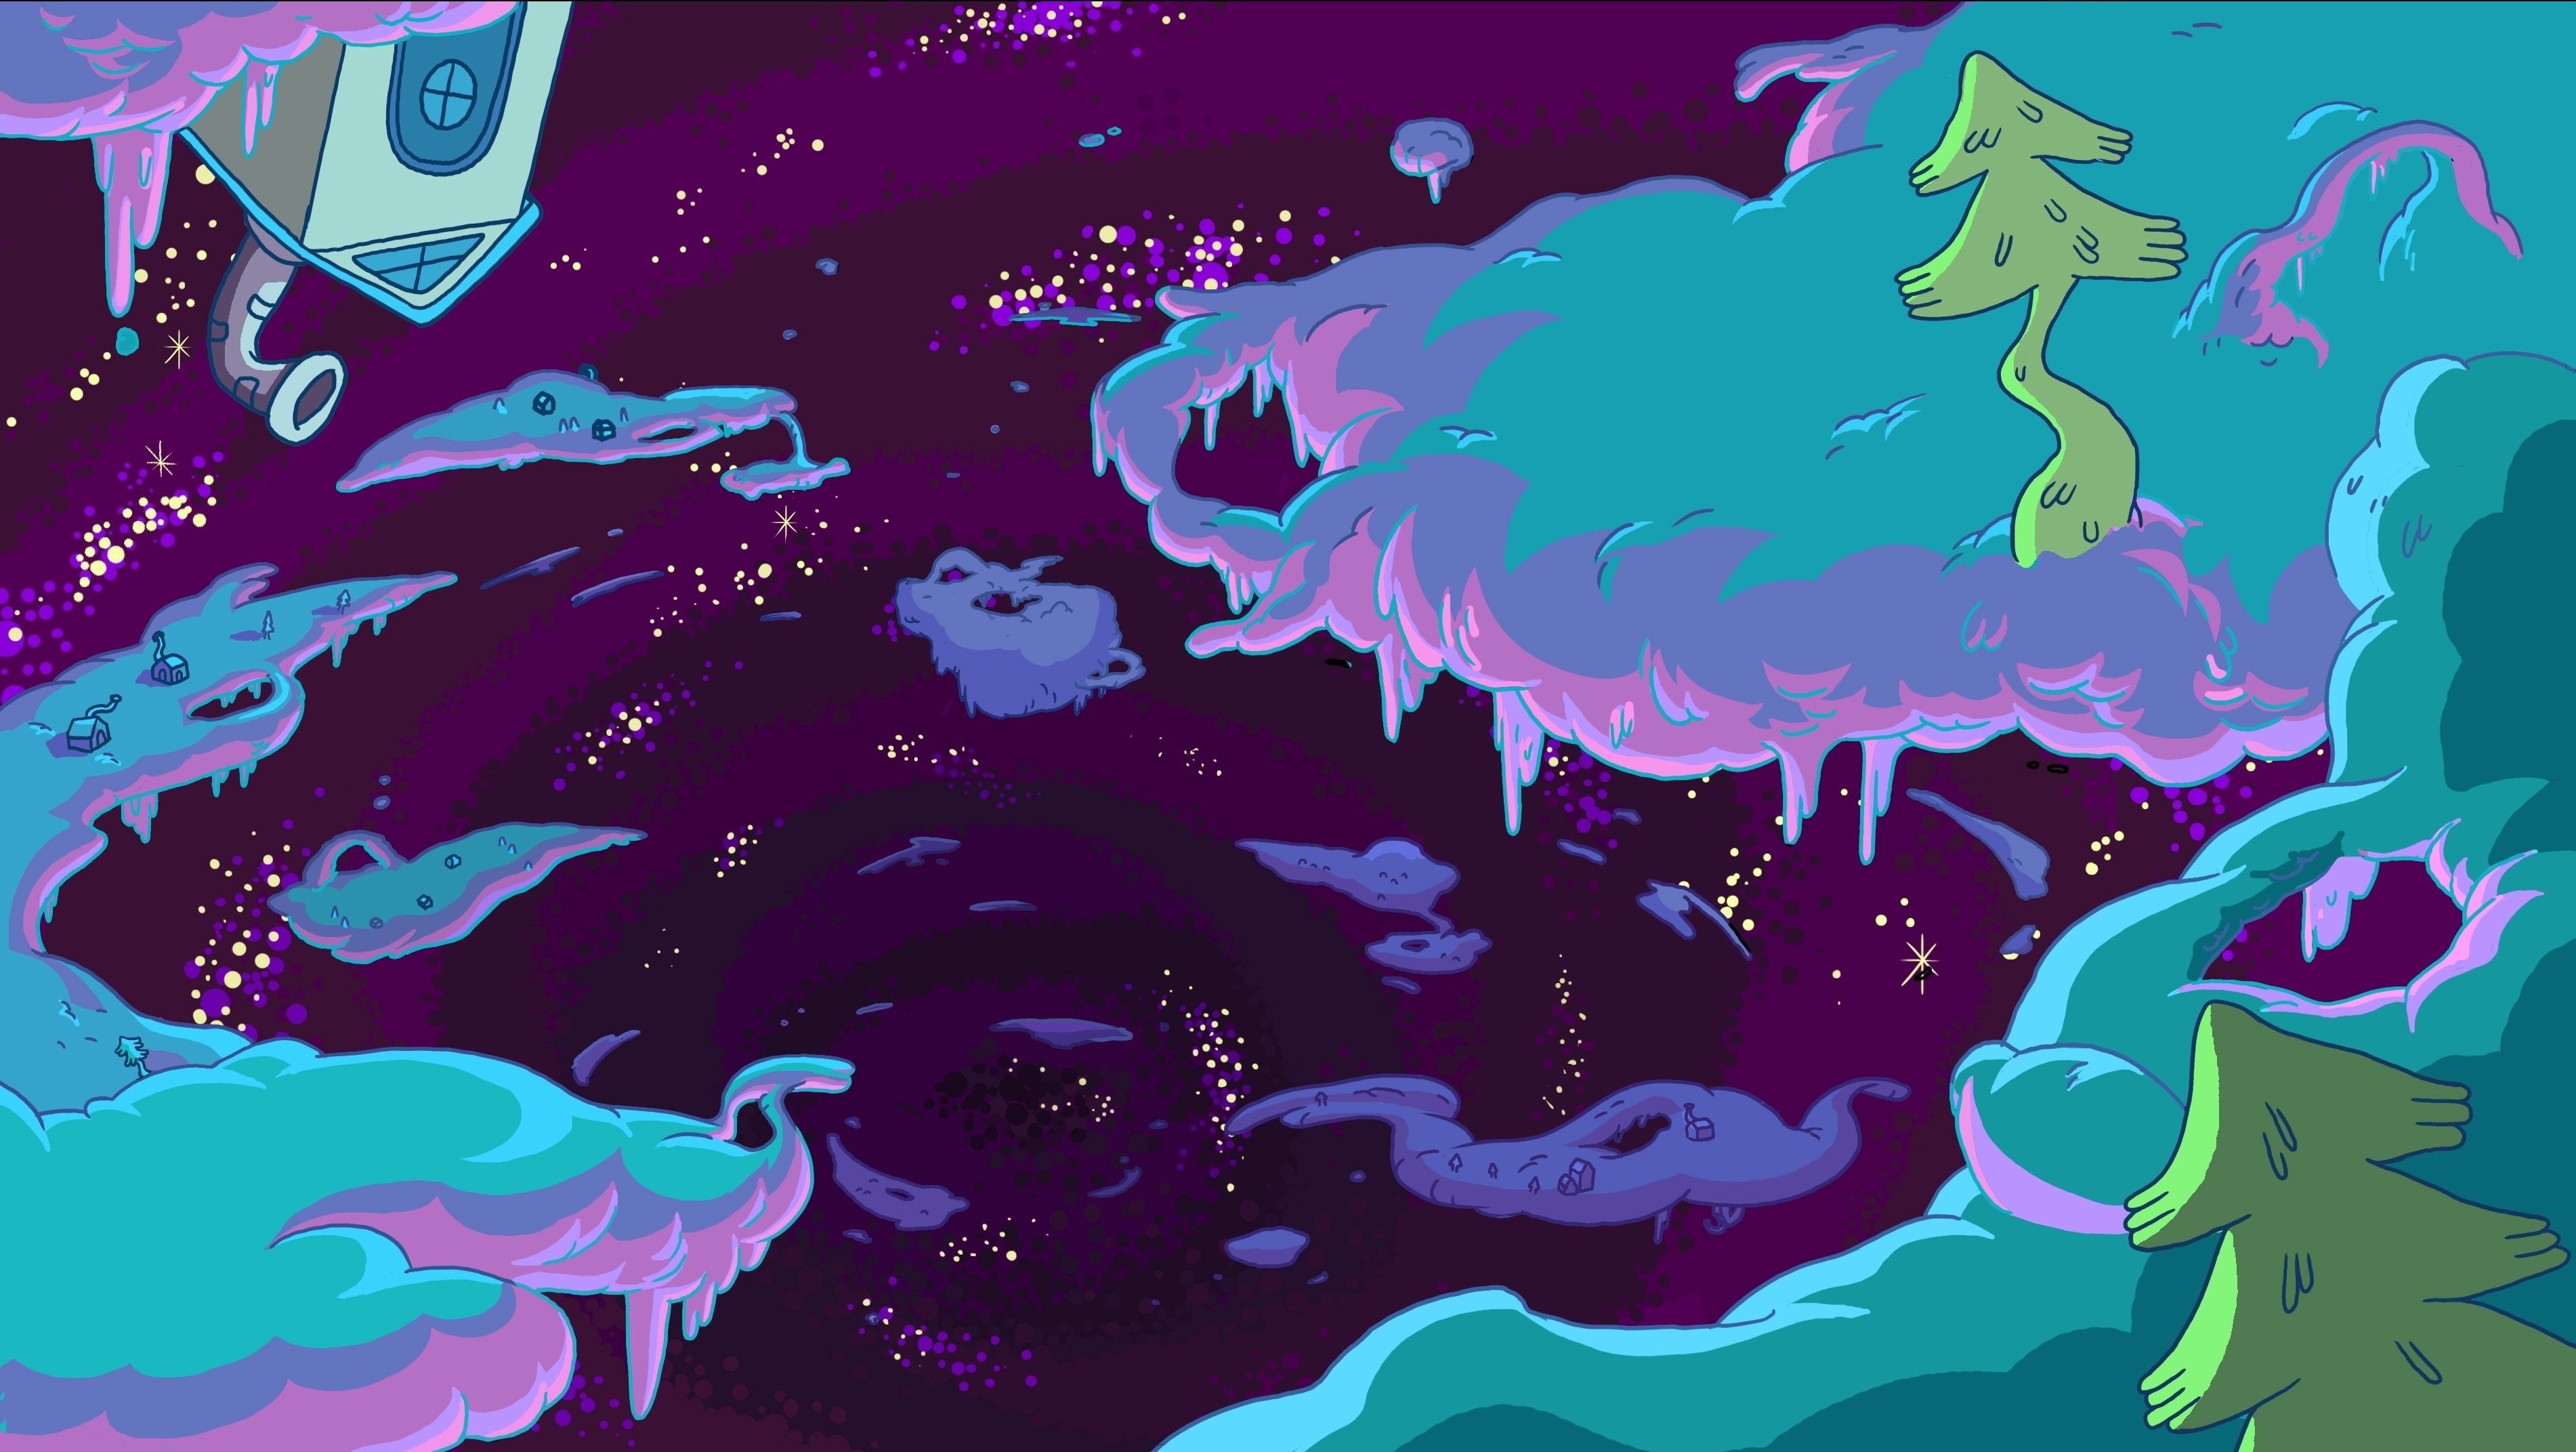 Adventure Time Wallpapers HD Free download  PixelsTalkNet